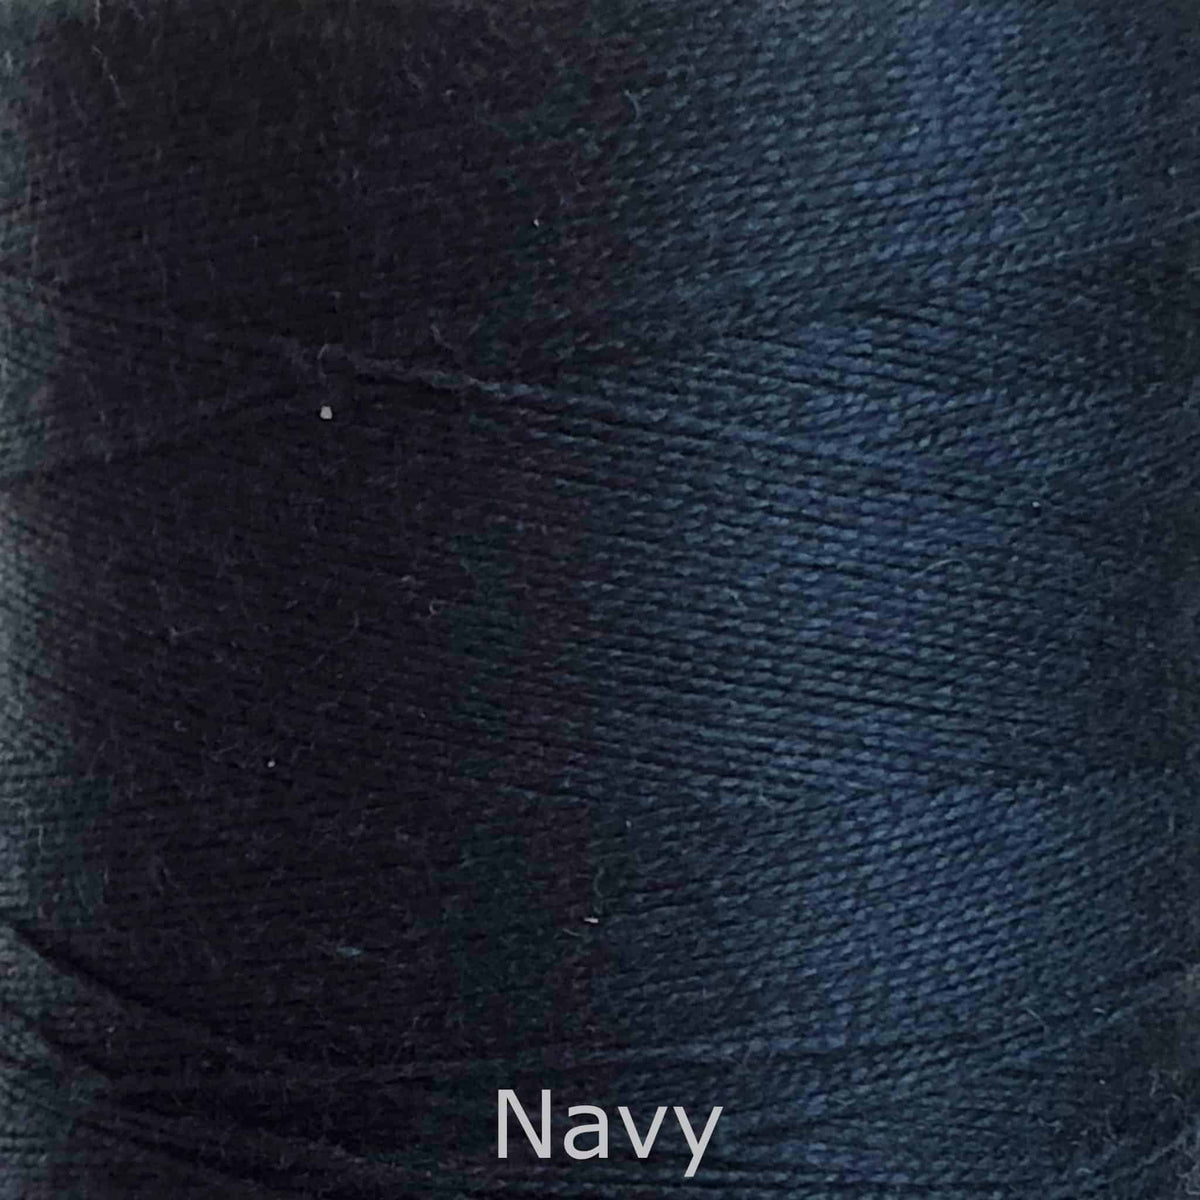 16/2 cotton weaving yarn navy